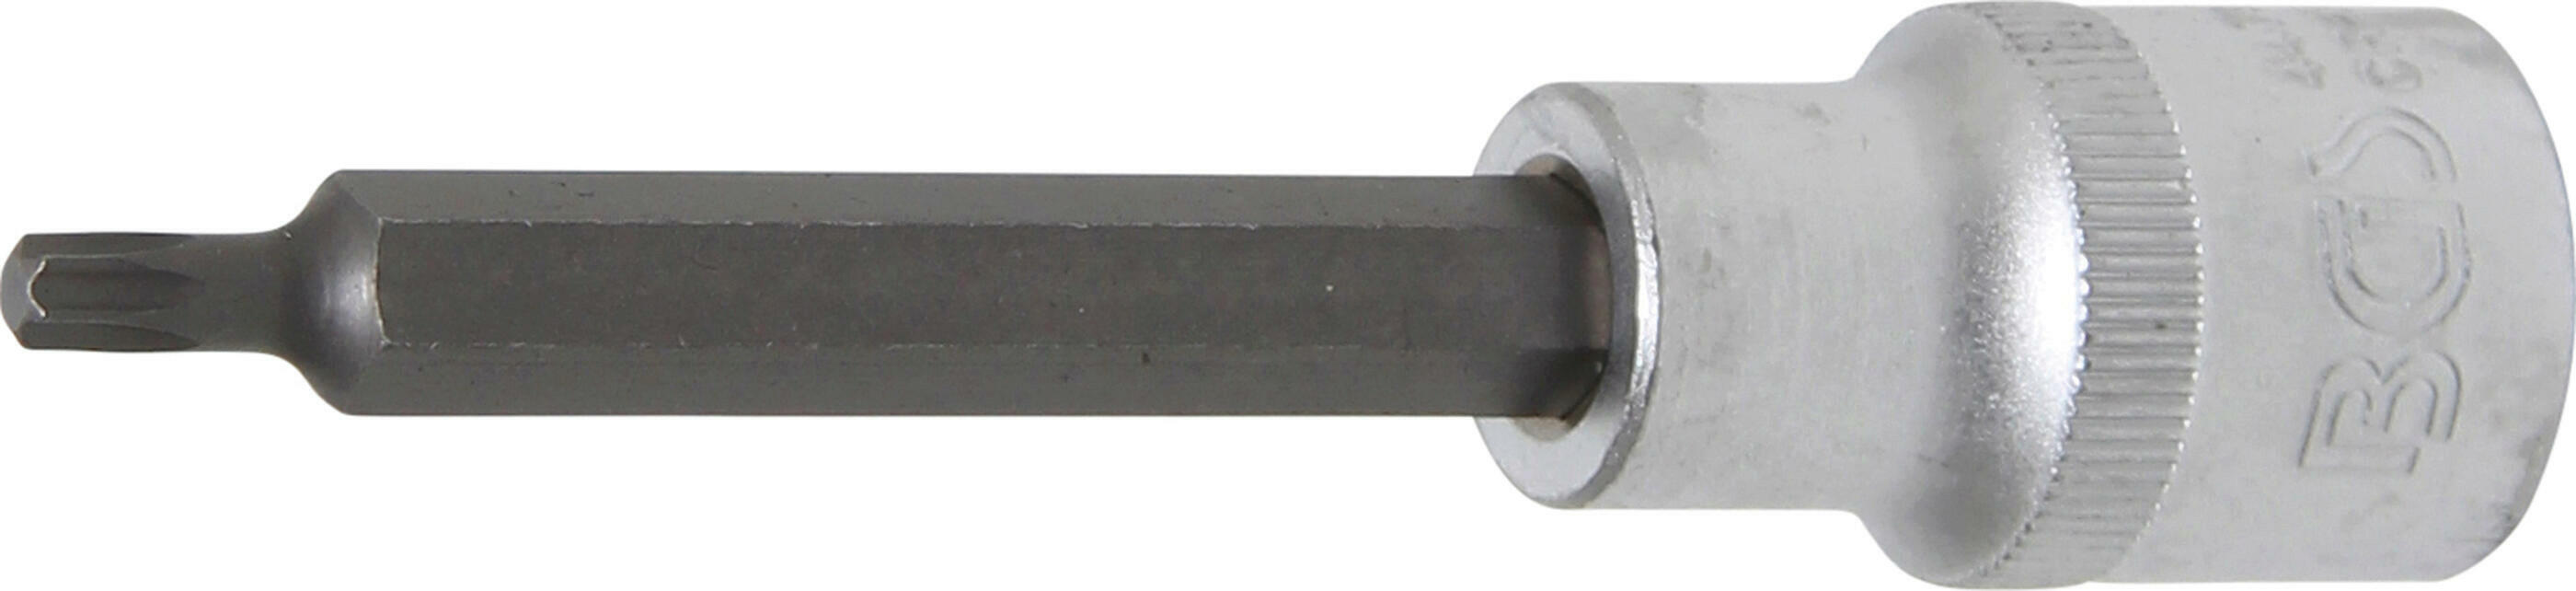 Bit-Einsatz | Länge 100 mm | Antrieb Innenvierkant 12,5 mm (1/2") | T-Profil (für Torx) T25